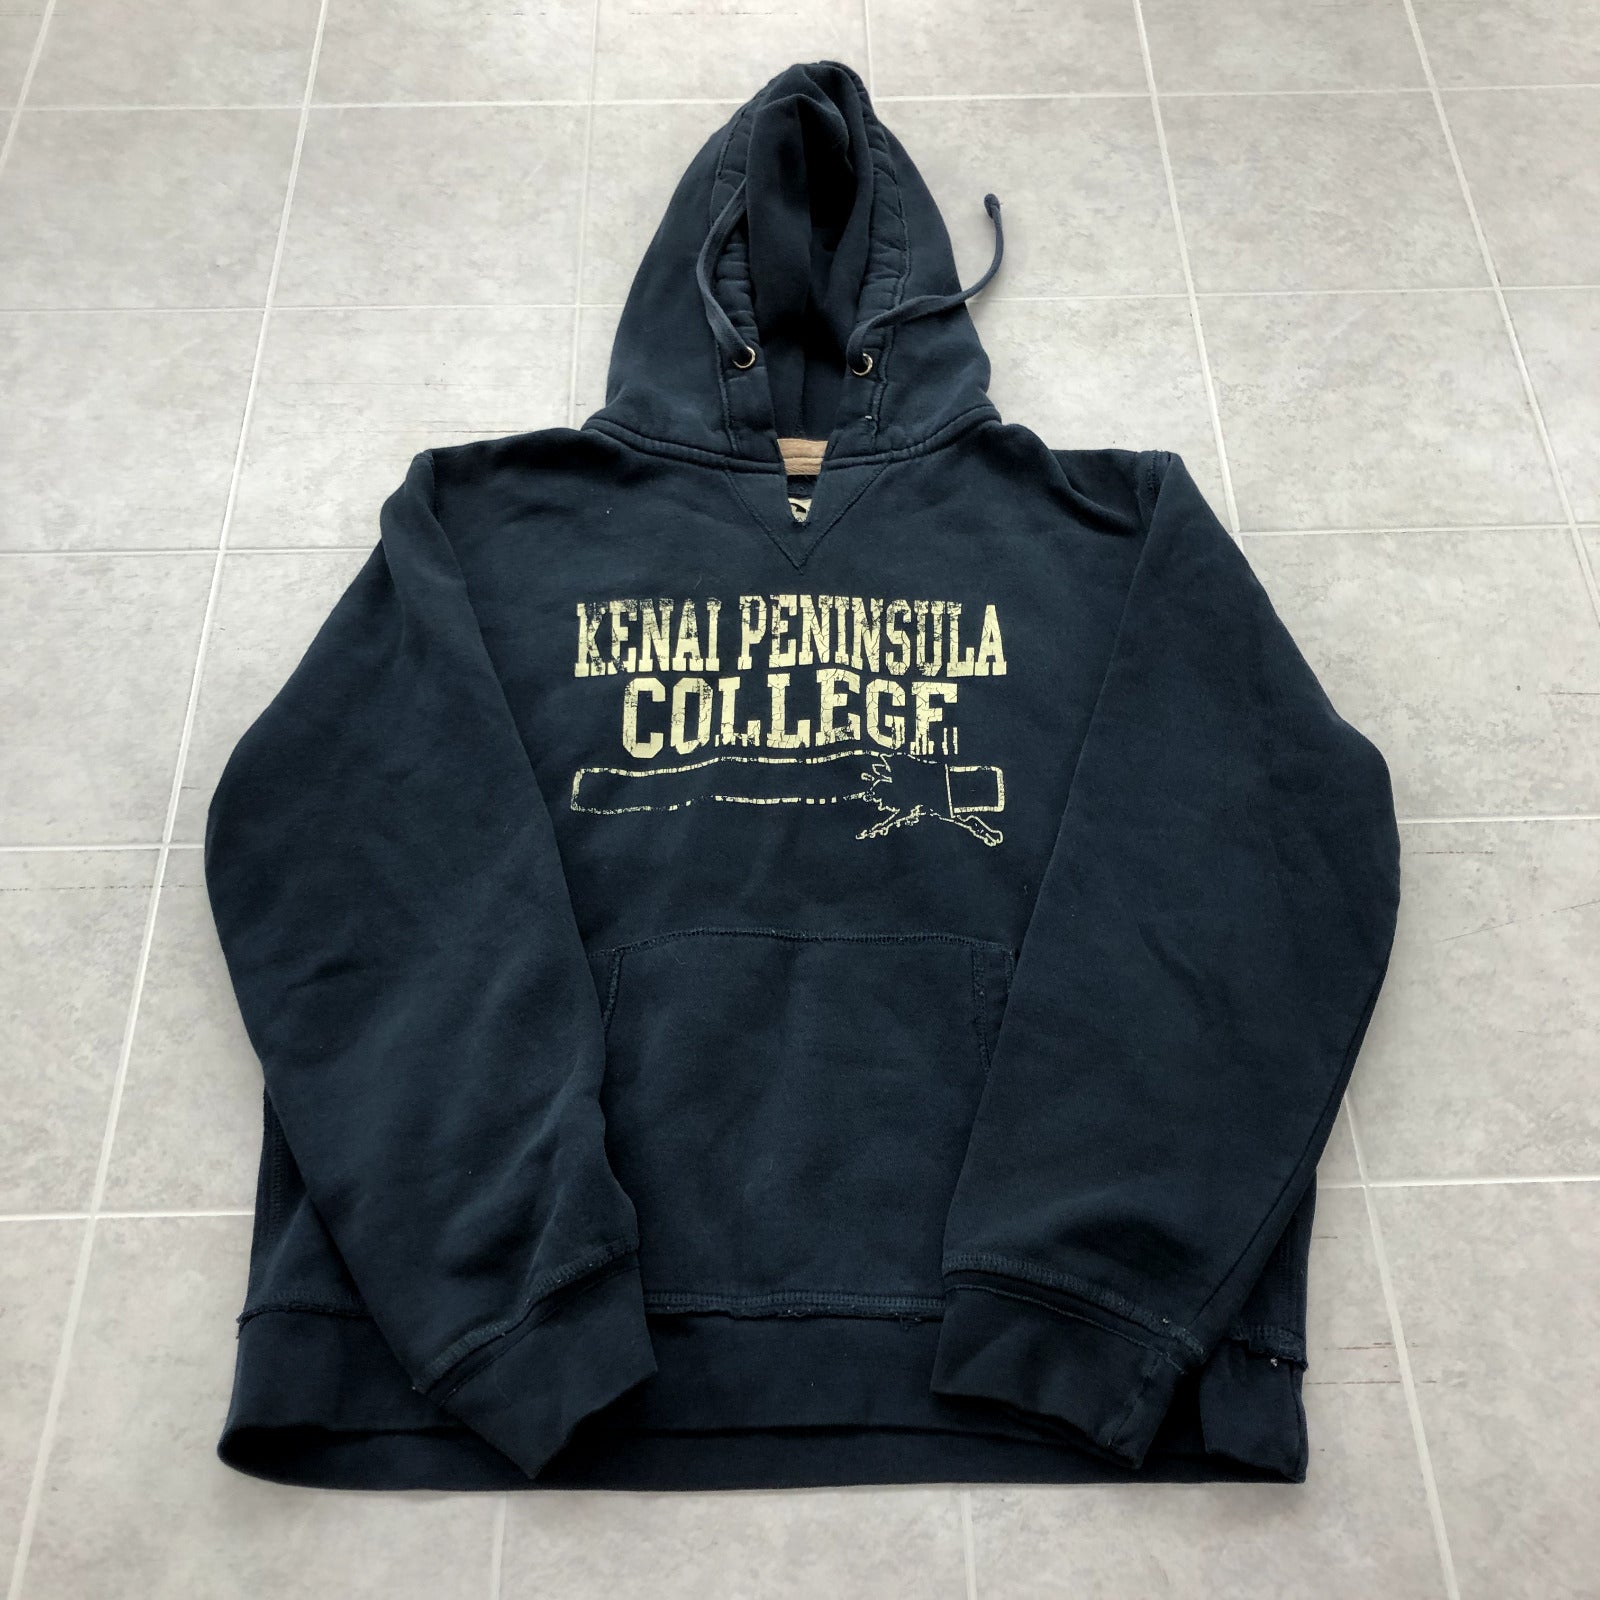 CI Sport Navy Blue Long Sleeve Kenai Peninsula College Sweatshirt Adult Size M